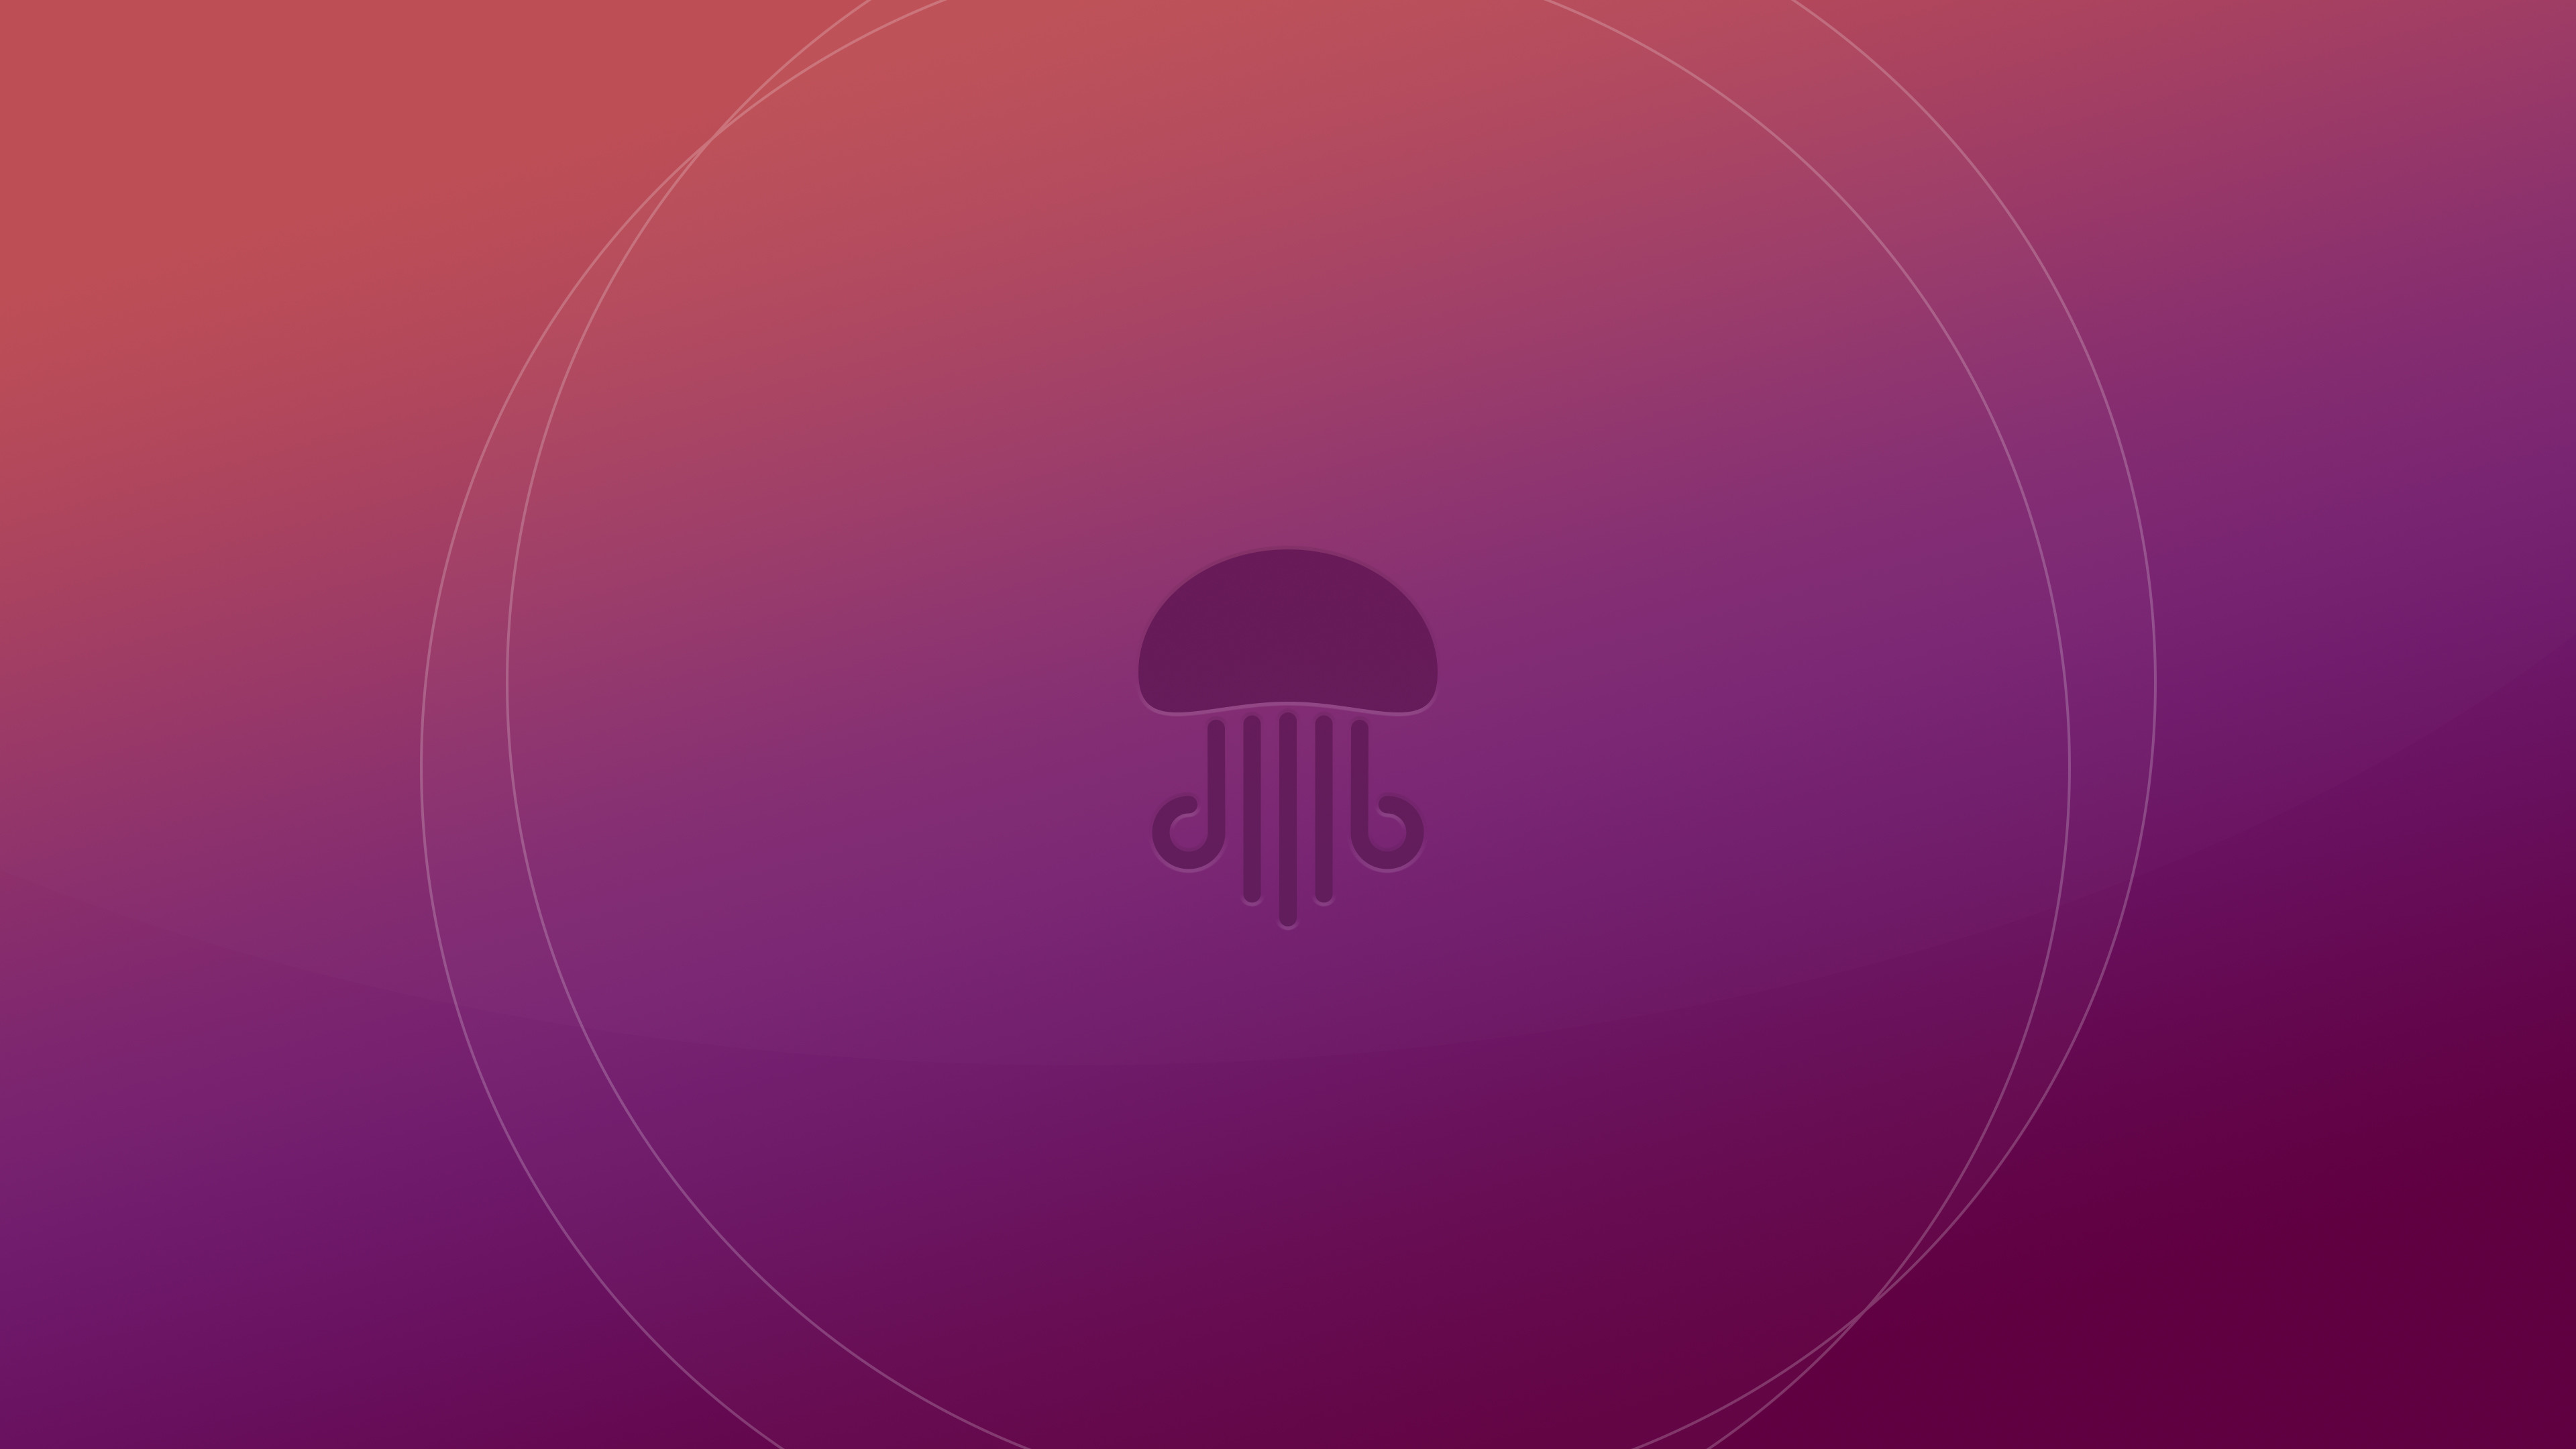 Wele To The Ubuntu Munity Discourse Hub